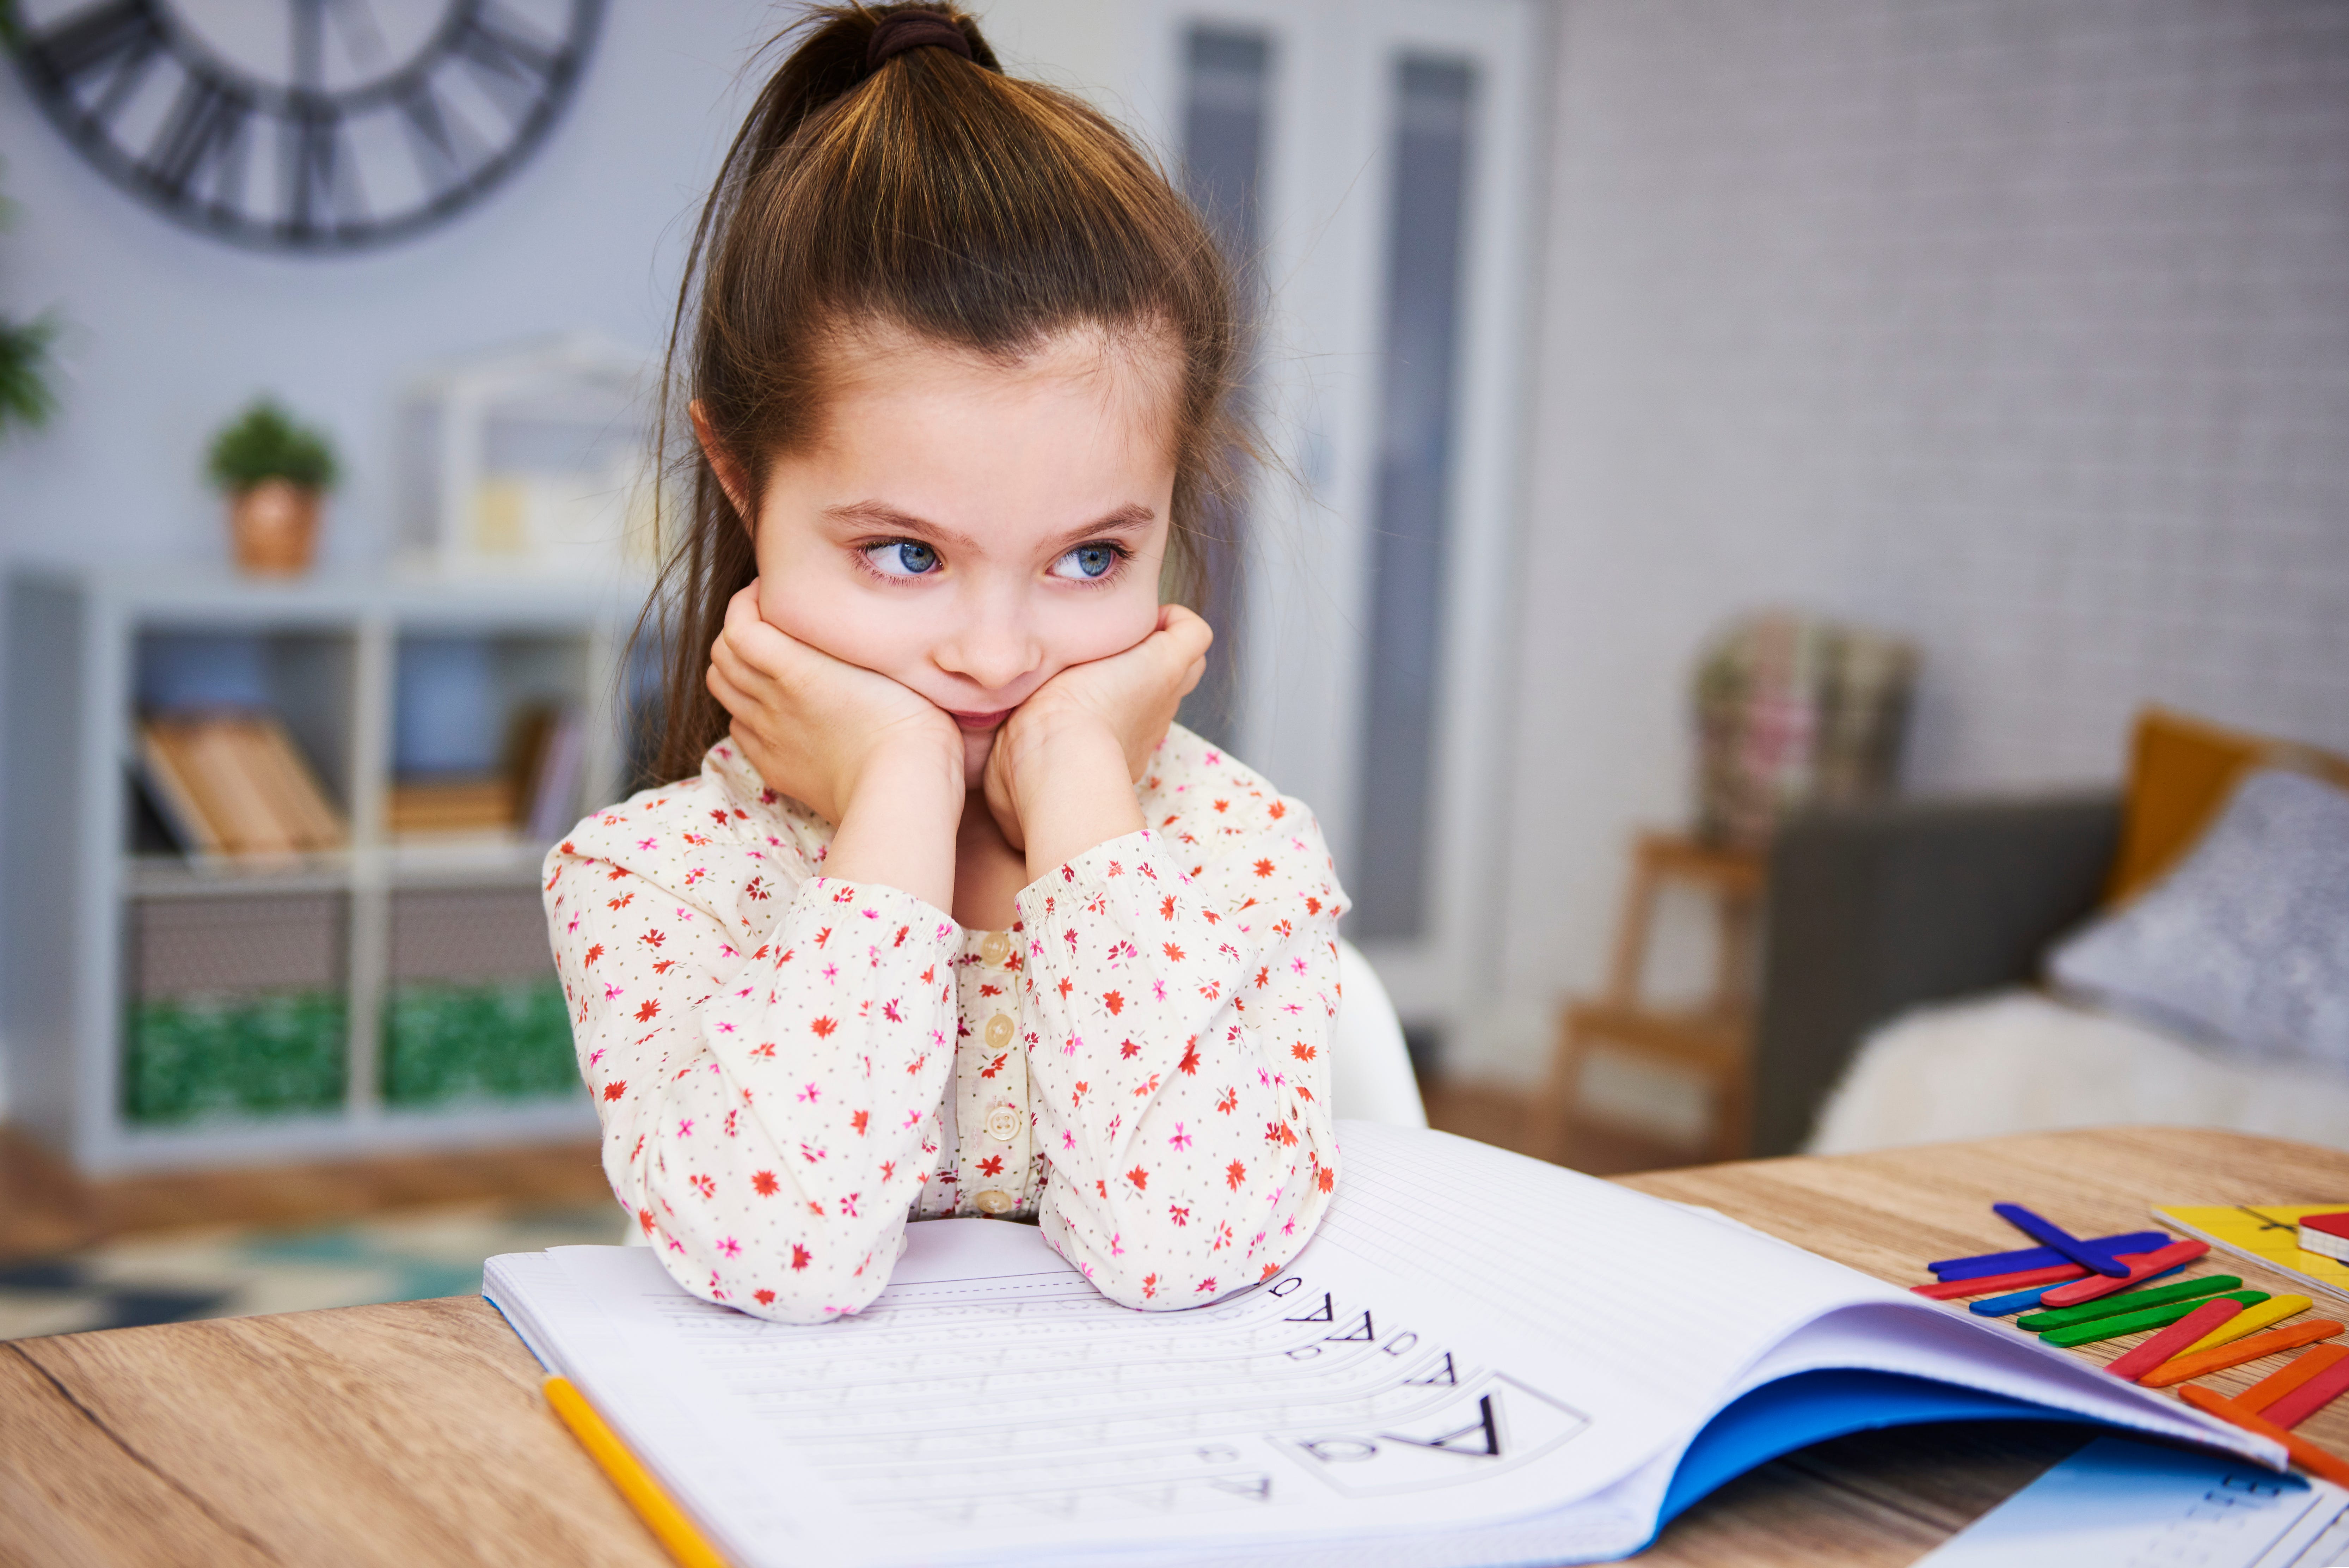 homework causes more harm than good